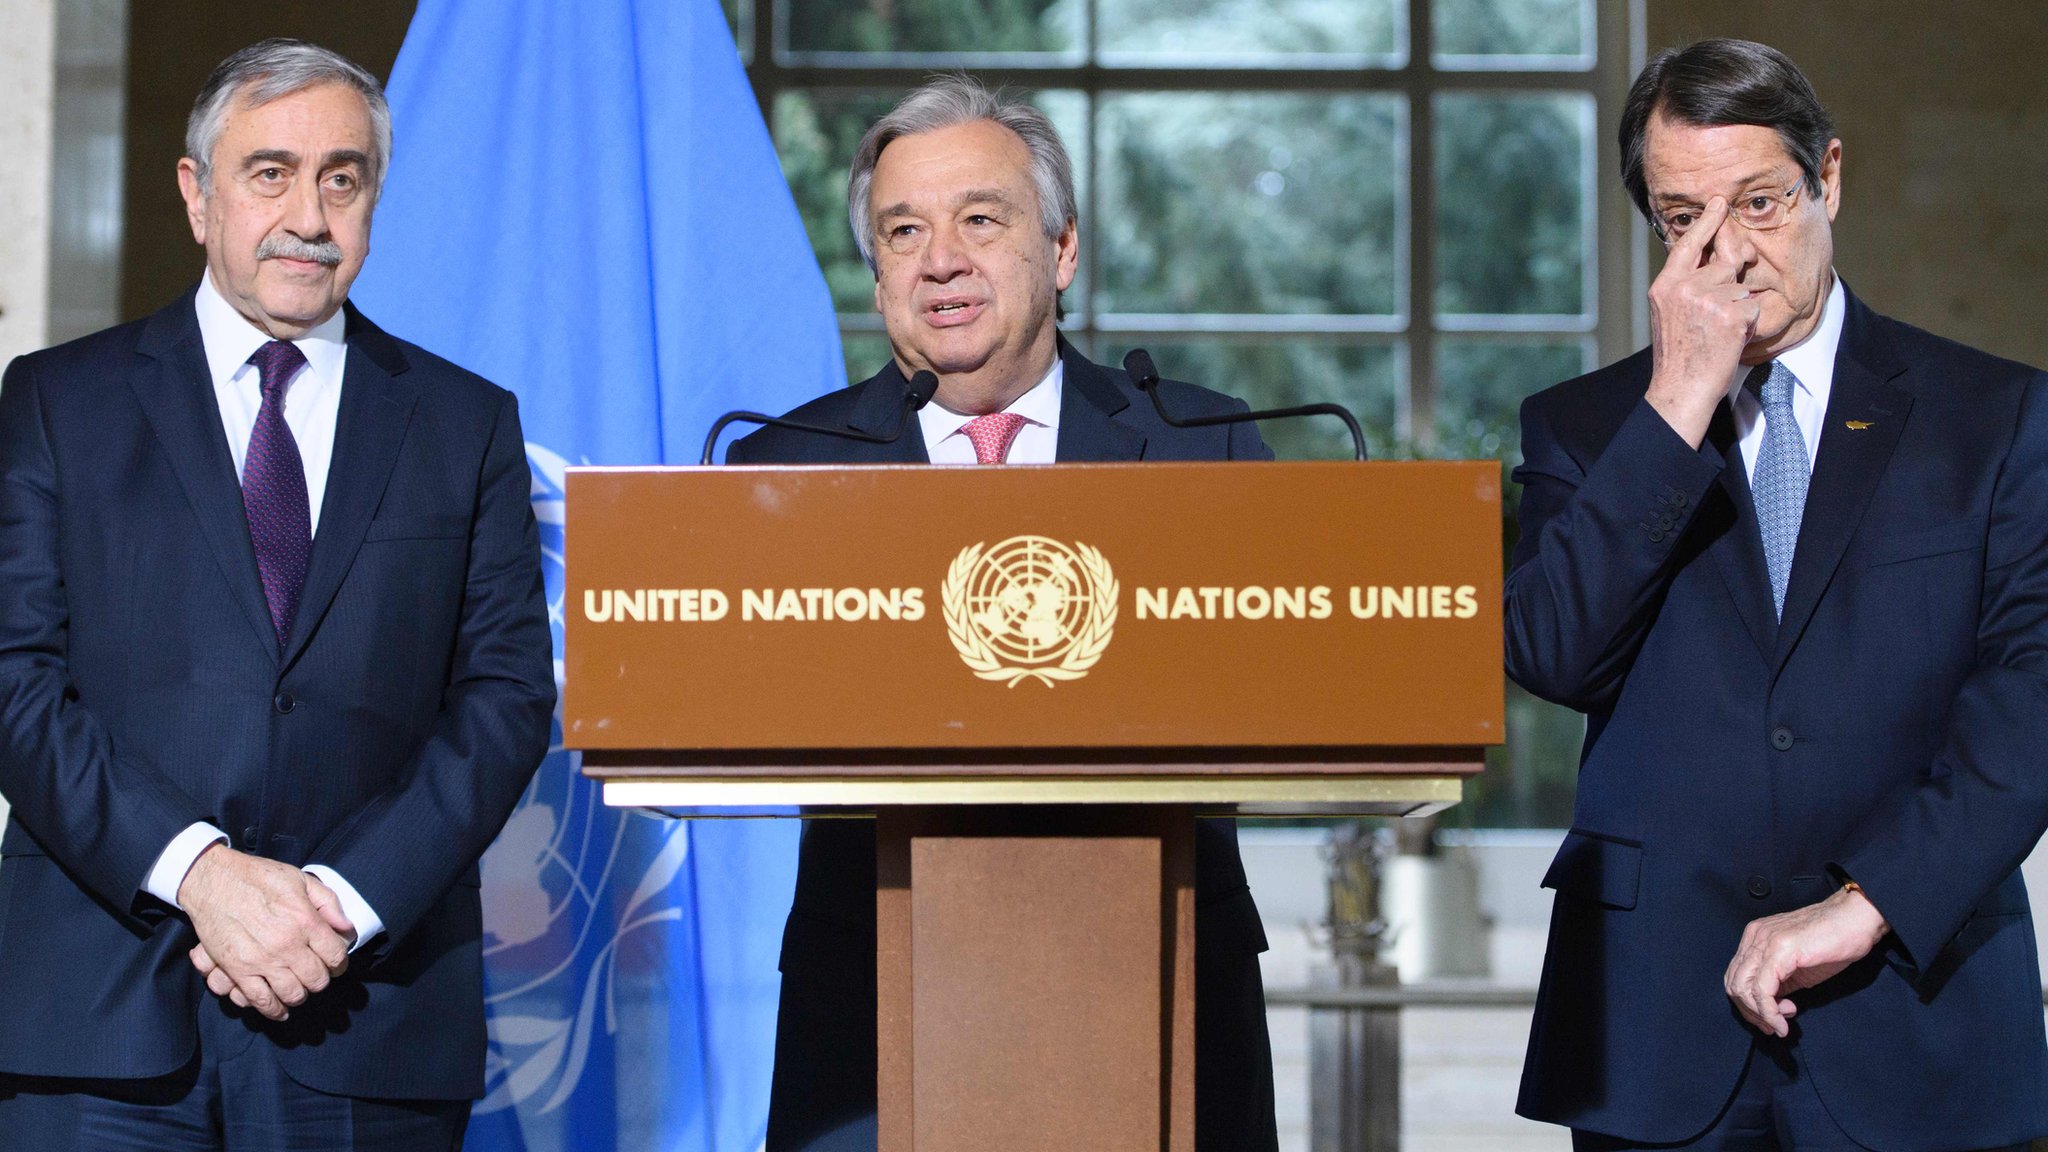 Cyprus peace deal close, says UN chief after Geneva talks